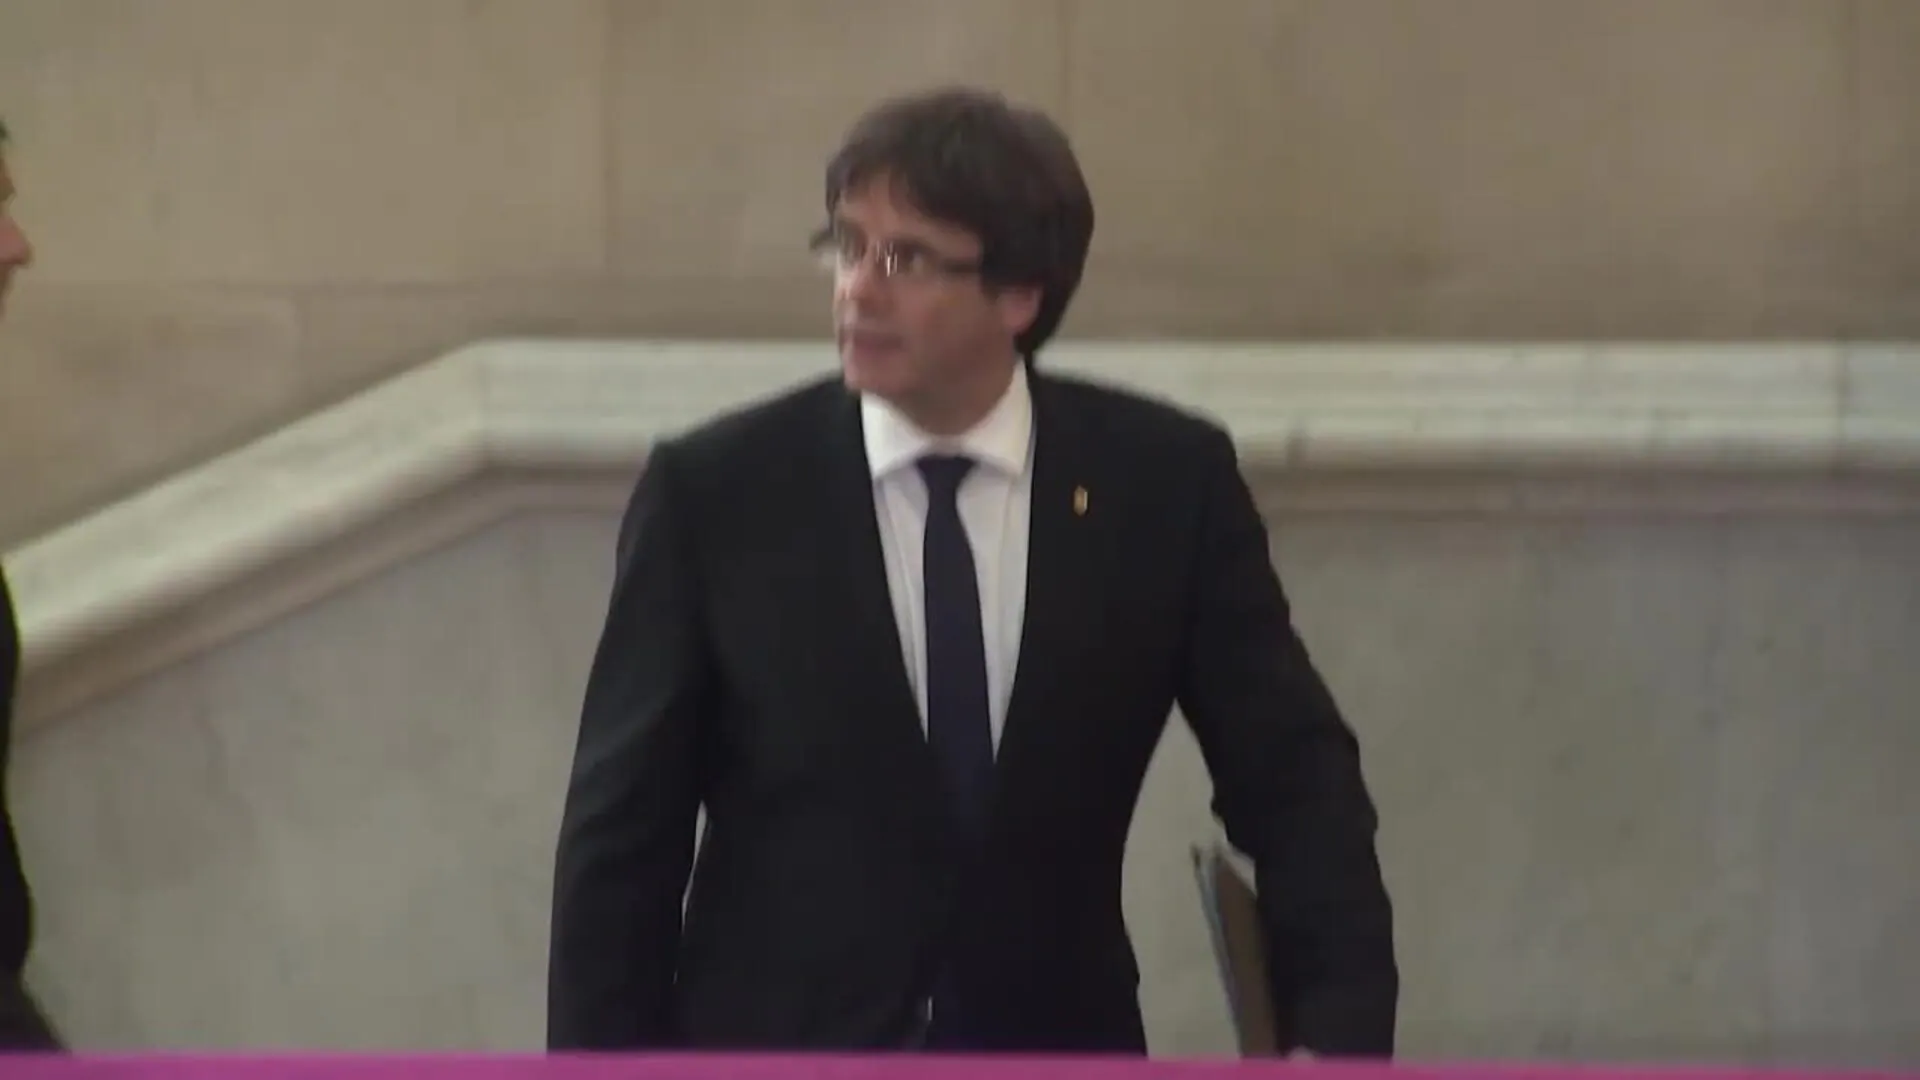 La teniente fiscal del TS reclama un informe a los fiscales que piden investigar a Puigdemont